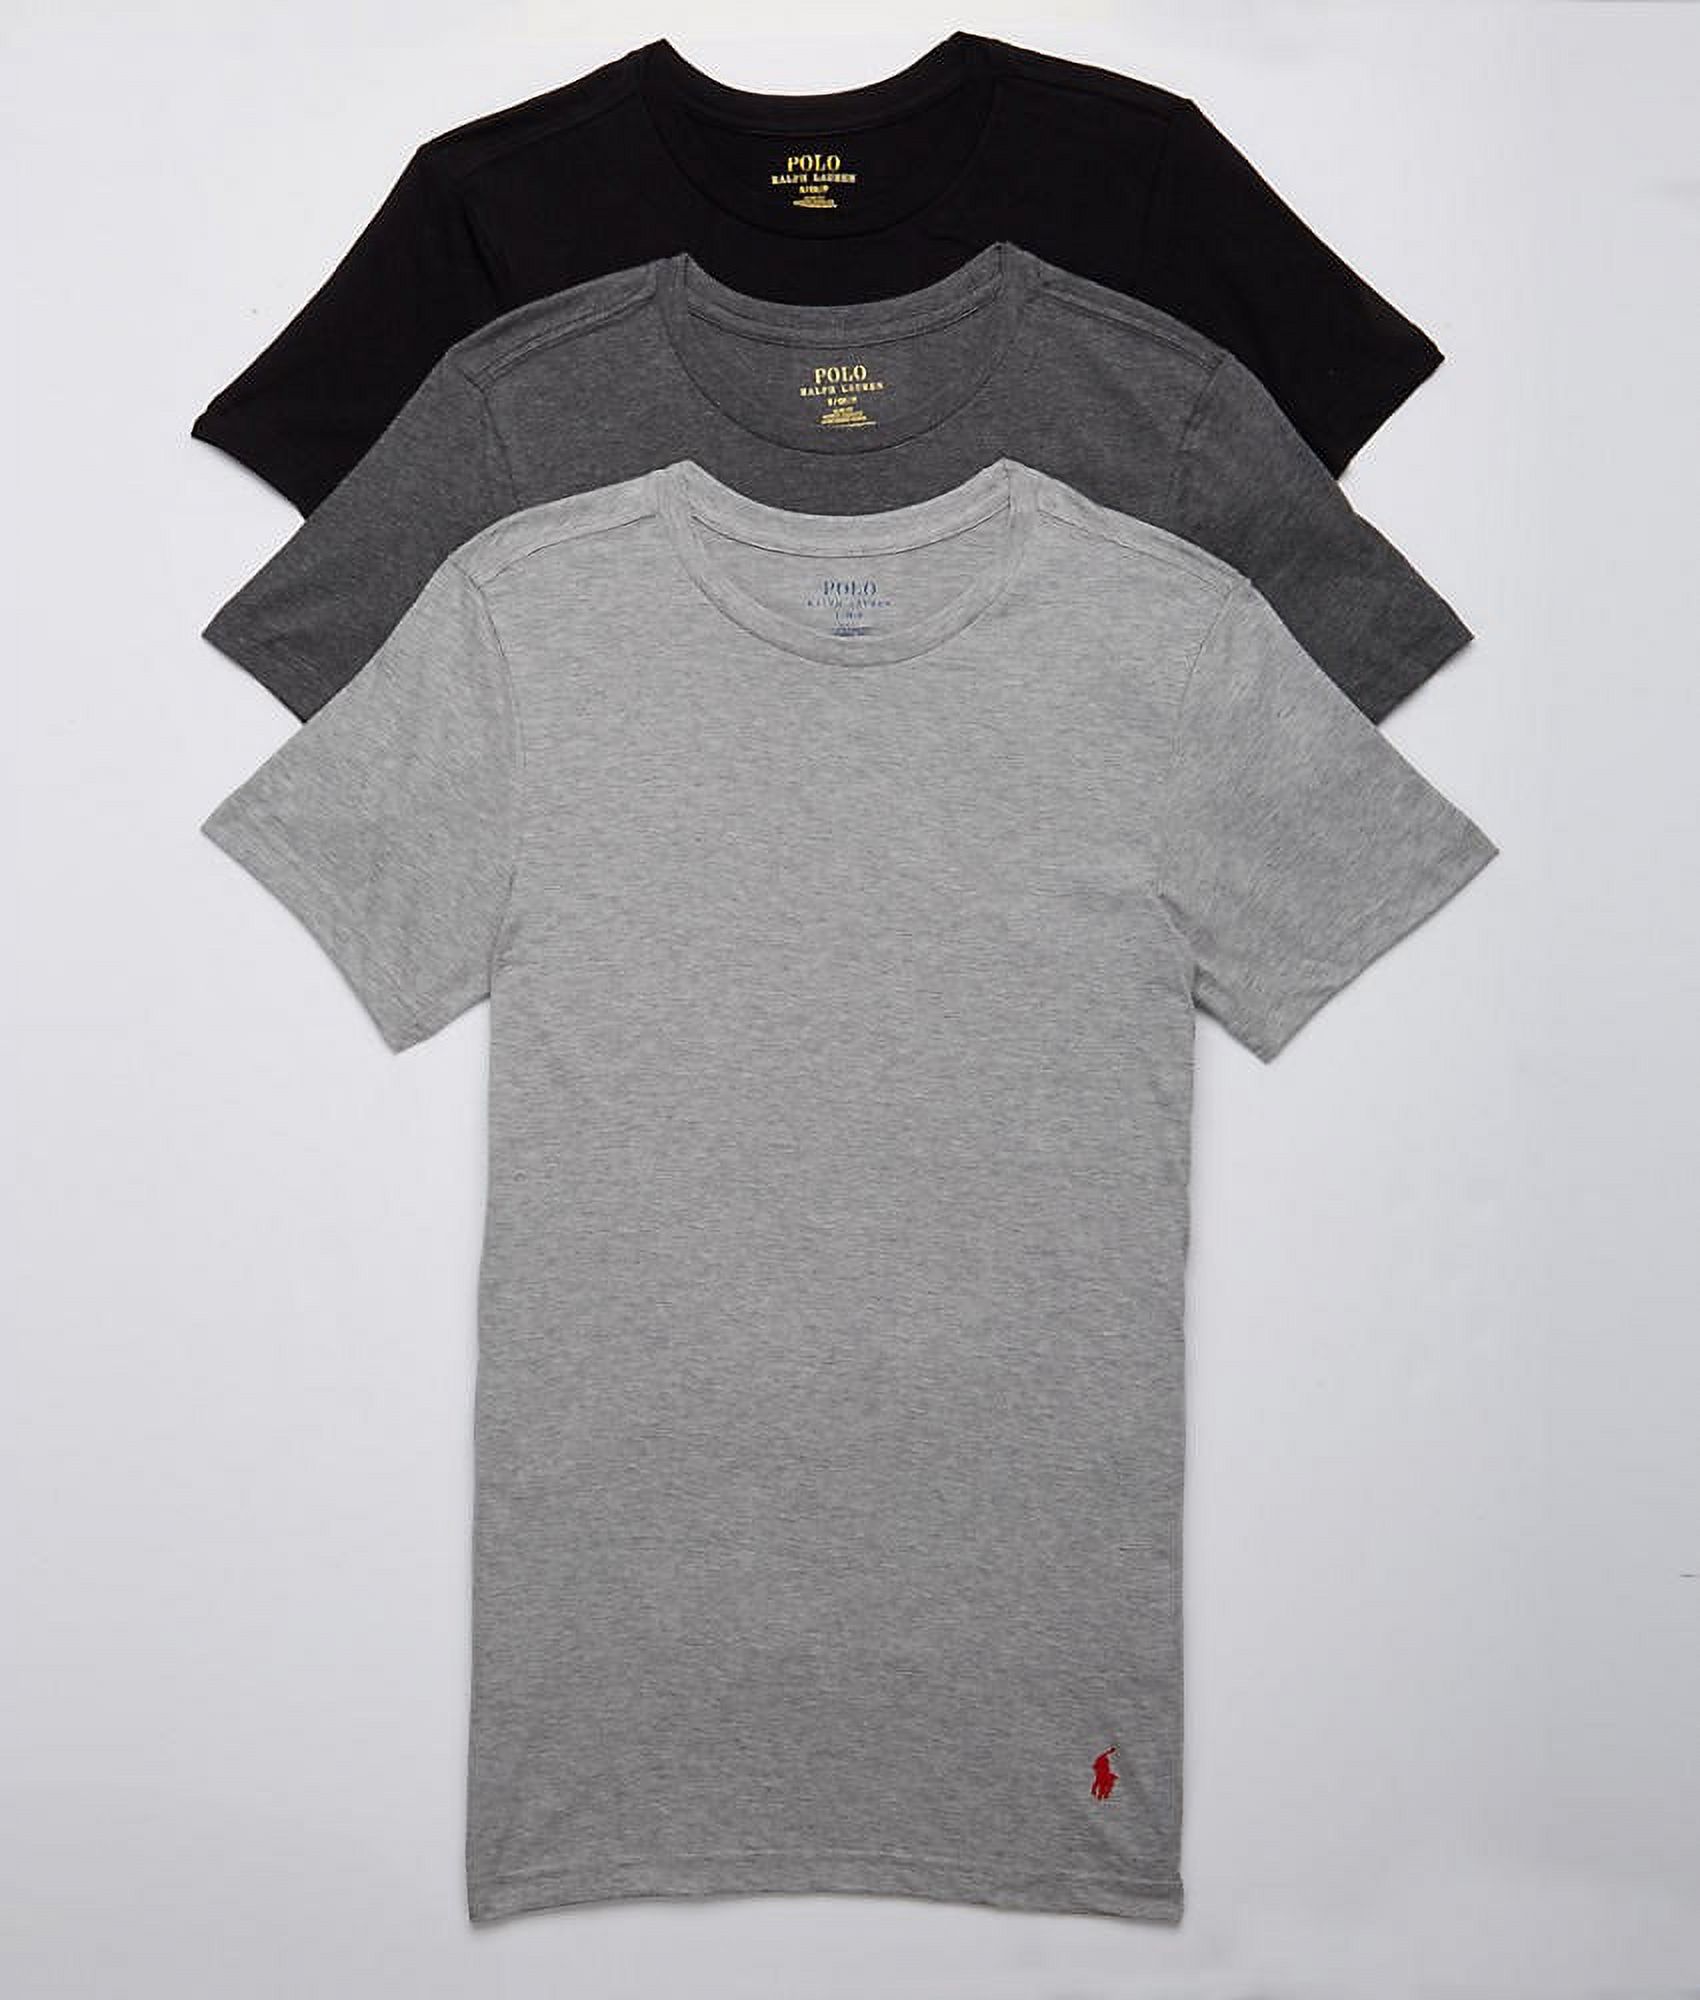 Polo Ralph Lauren Classic Fit Cotton T-Shirt 3-Pack - image 1 of 2